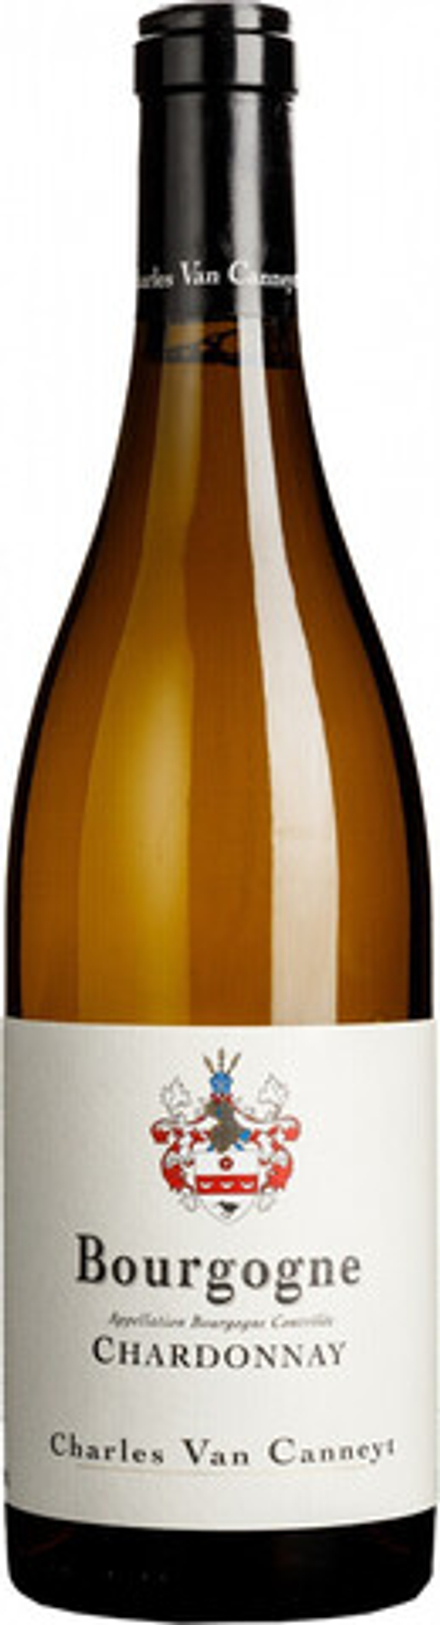 Вино Charles Van Canneyt Bourgogne AOC Chardonnay, 0,75 л.